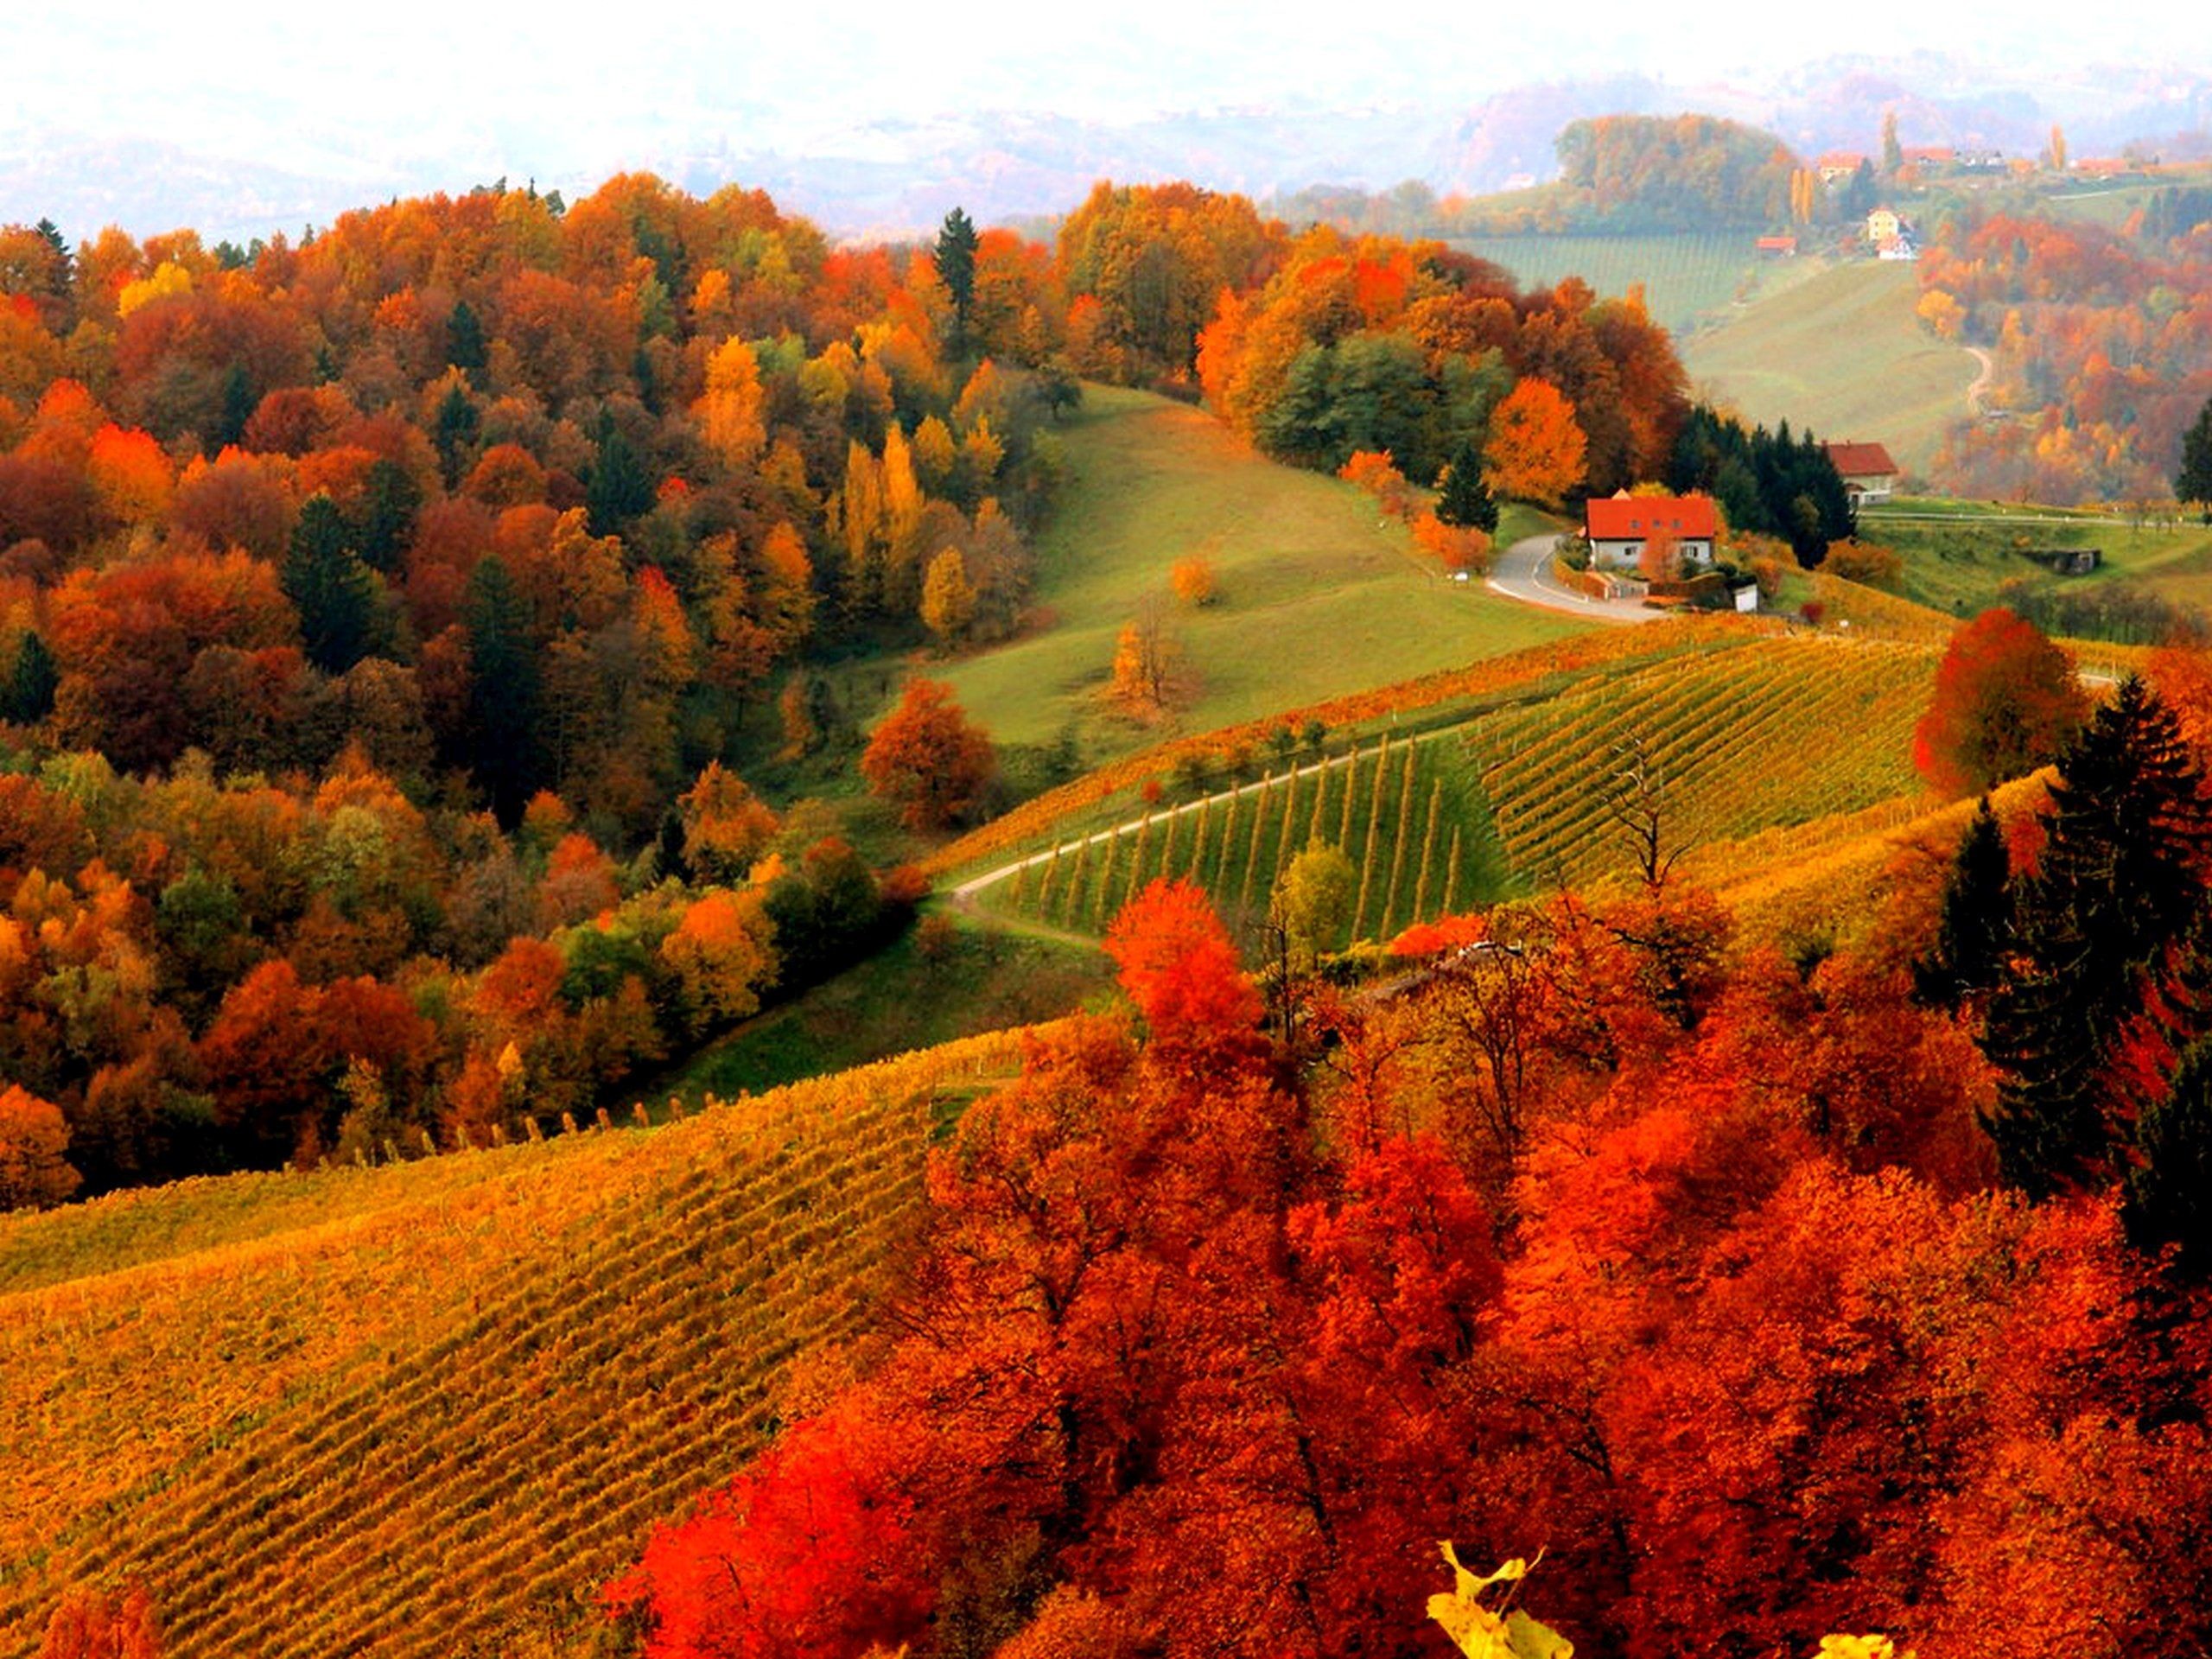 Beautiful autumn season wallpapers – Fall Foliage Wallpapers For Desktop Wallpaper Gallery. Download